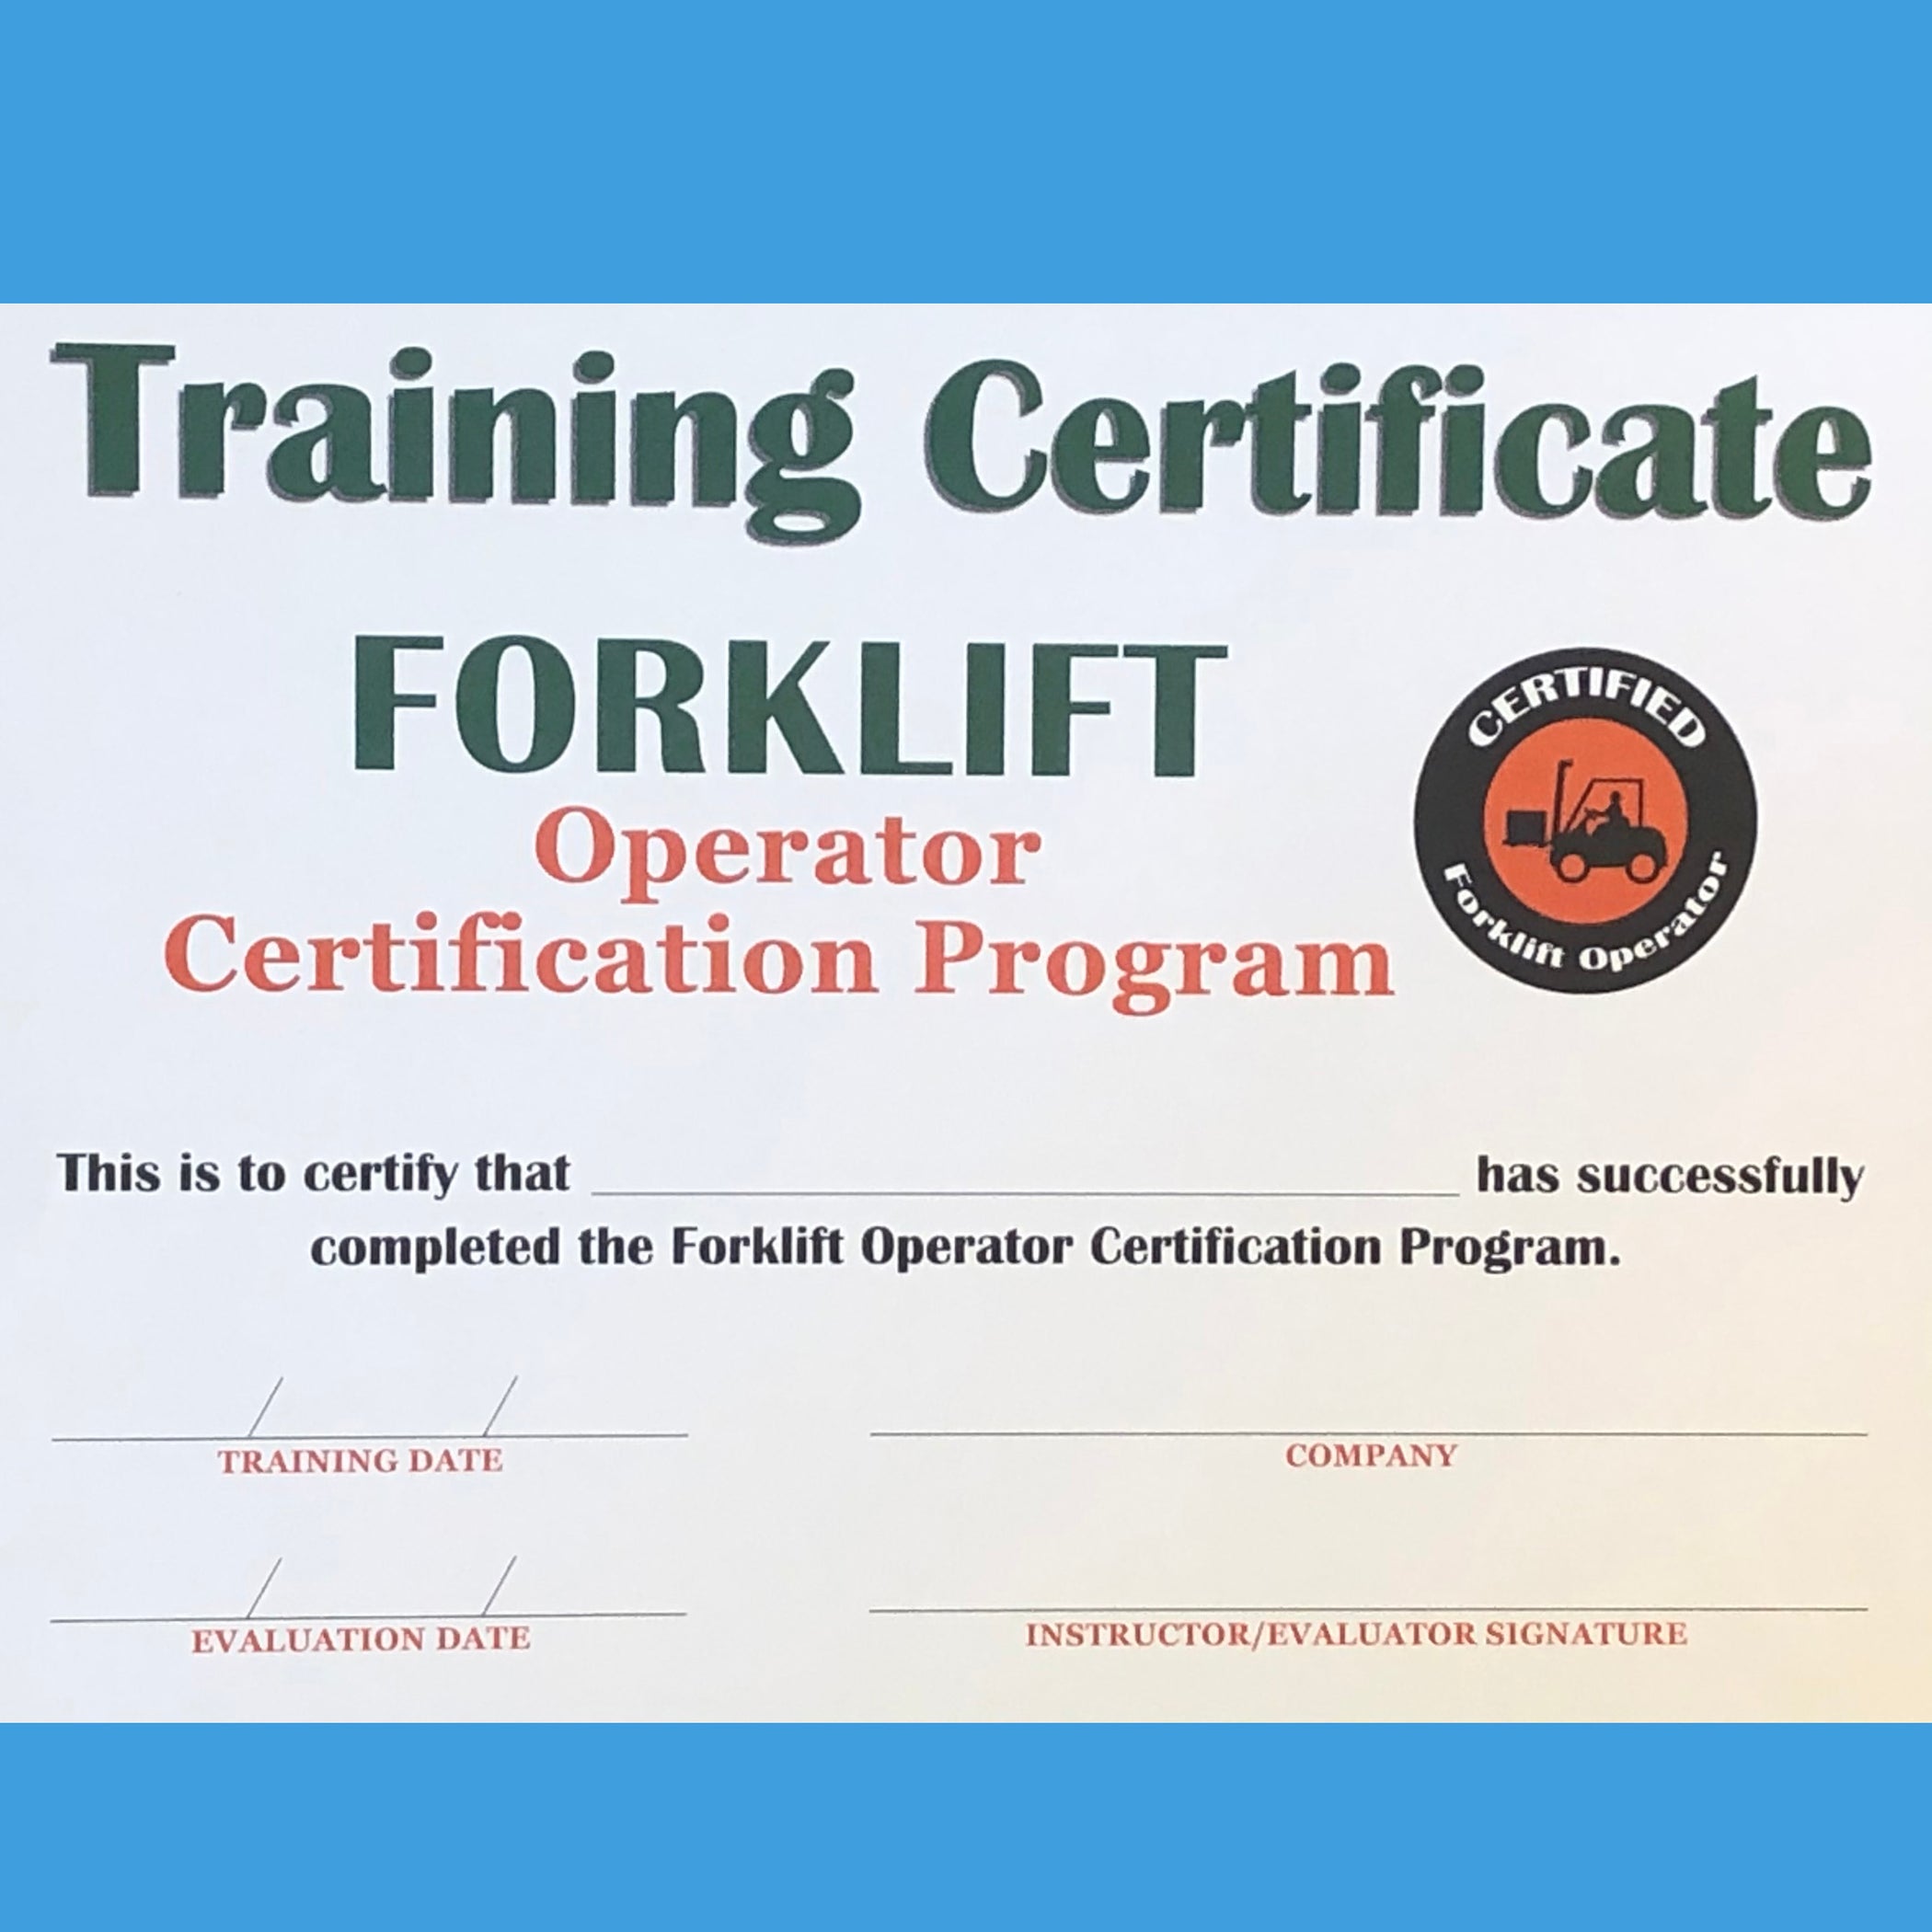 Forklift Certification Certificate Template